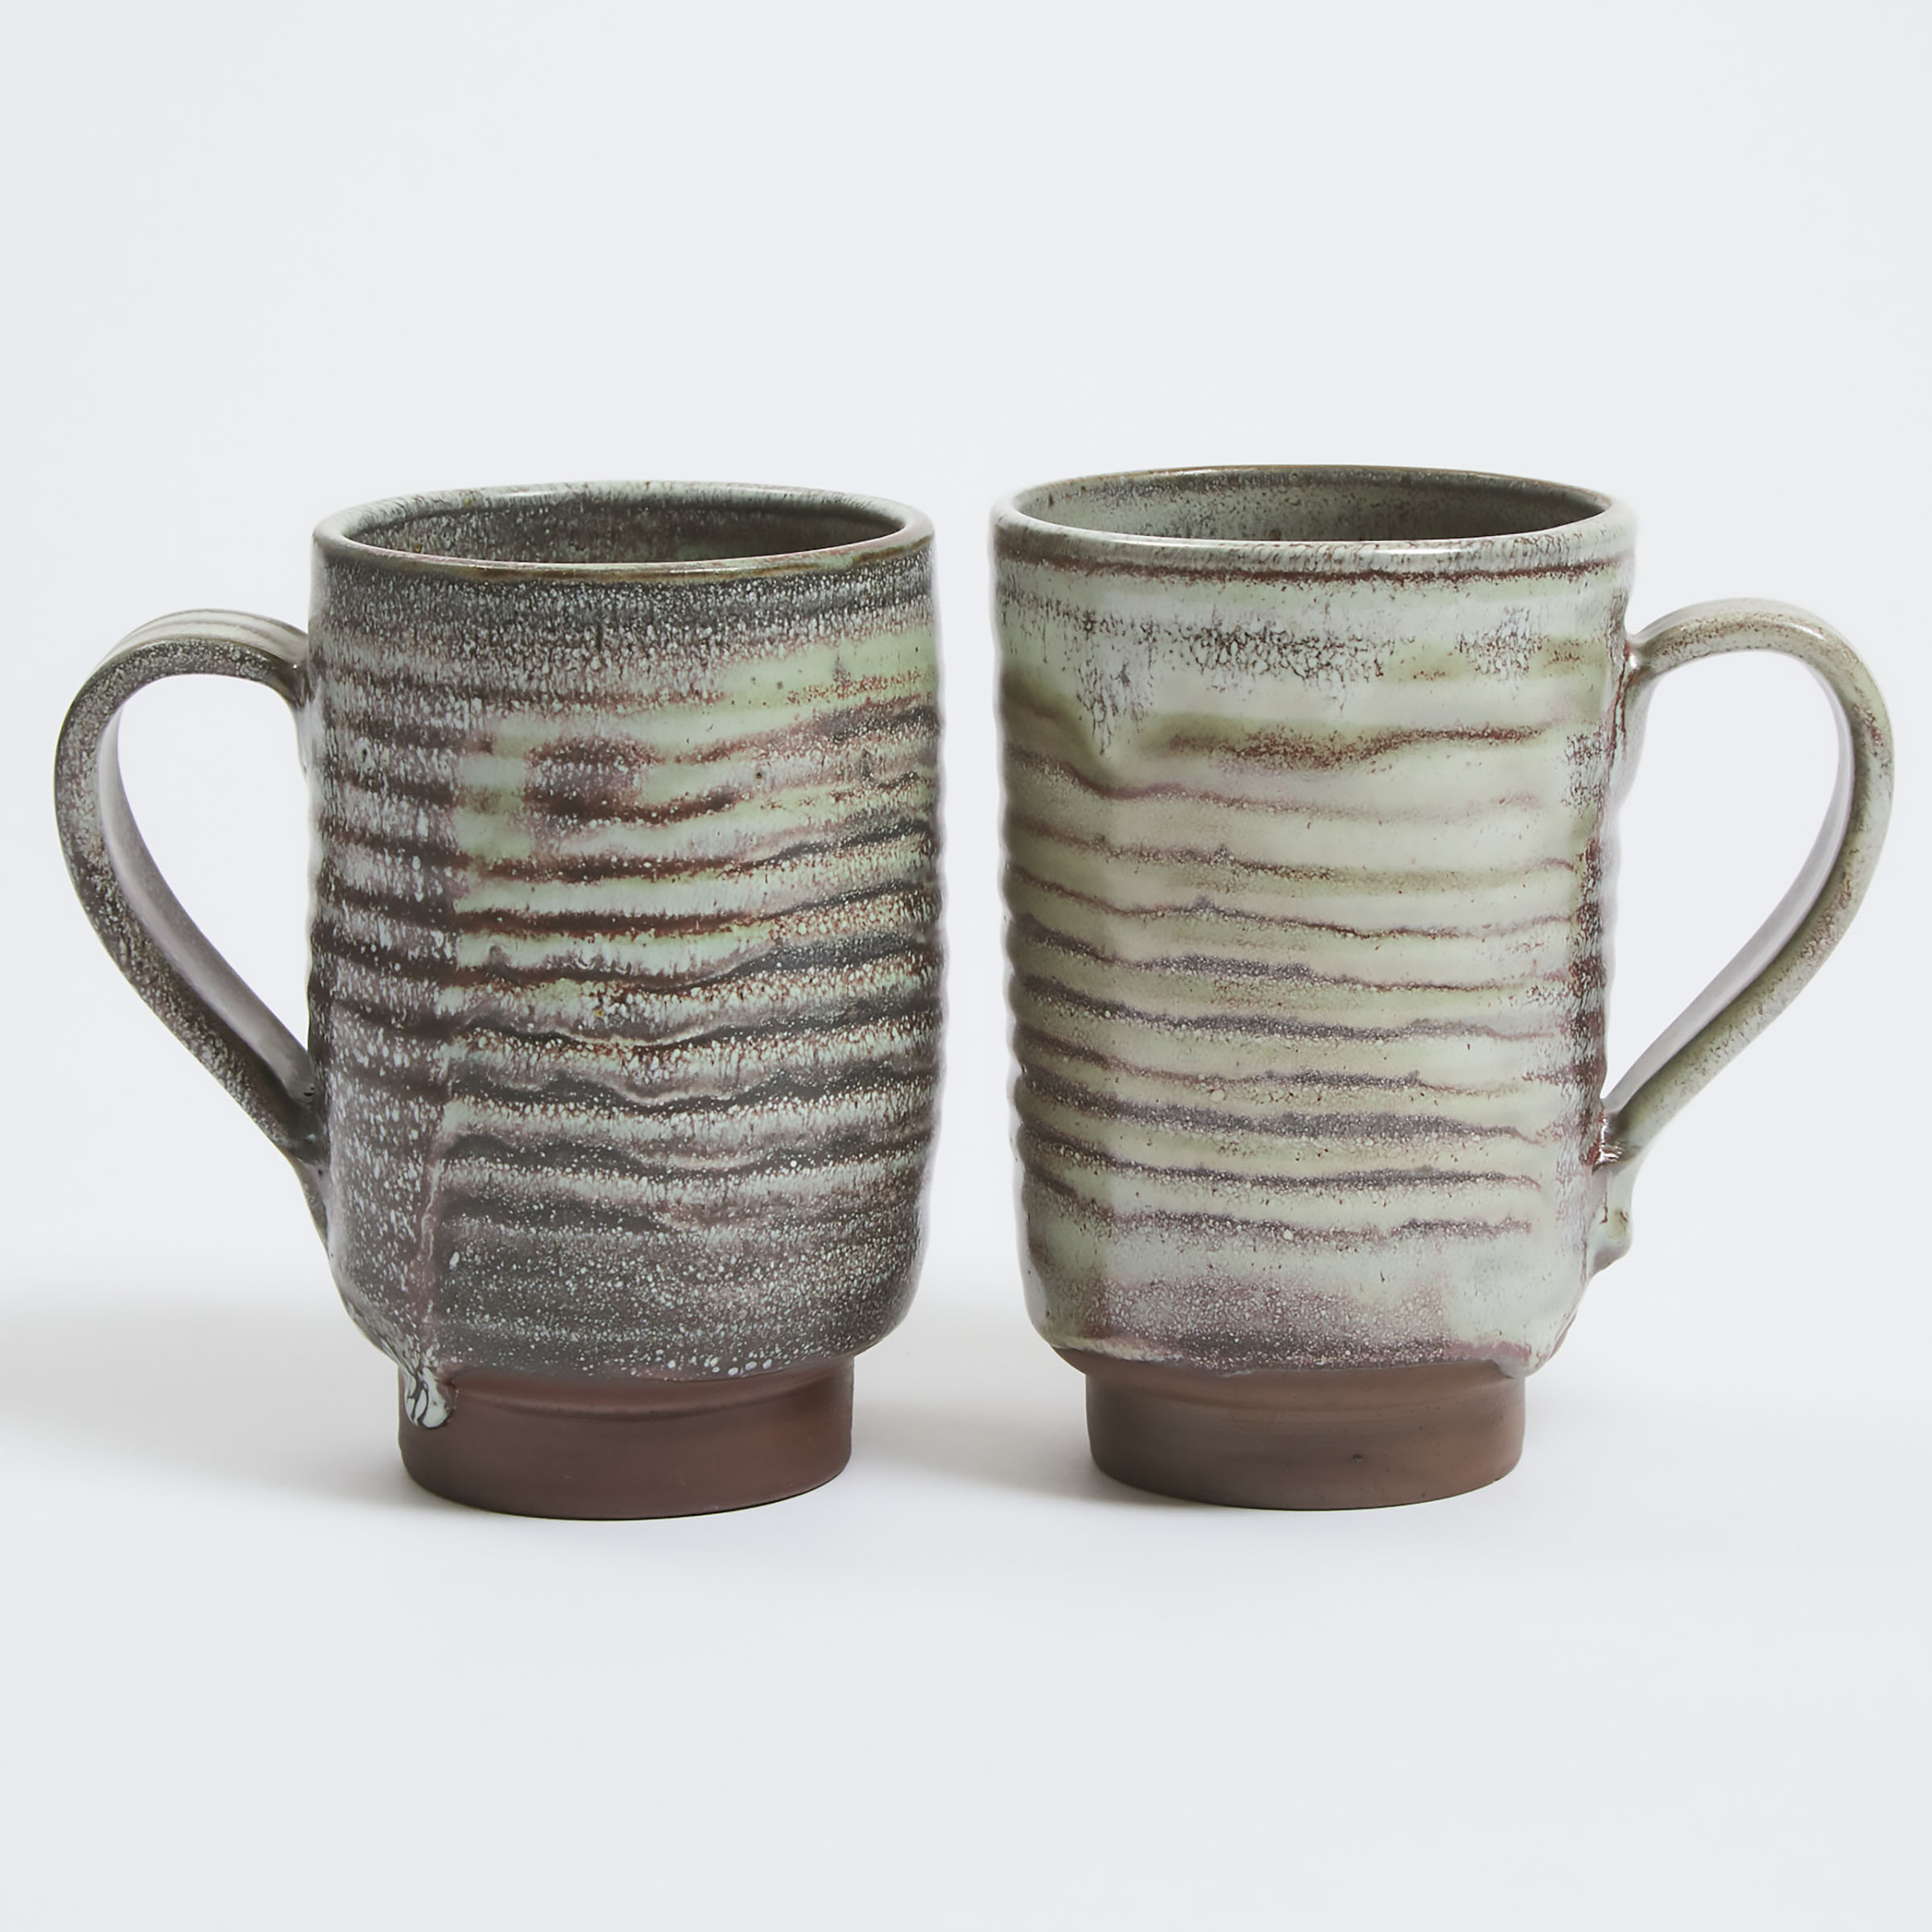 Two Deichmann Glazed Stoneware Mugs, Kjeld & Erica Deichmann, mid-20th century